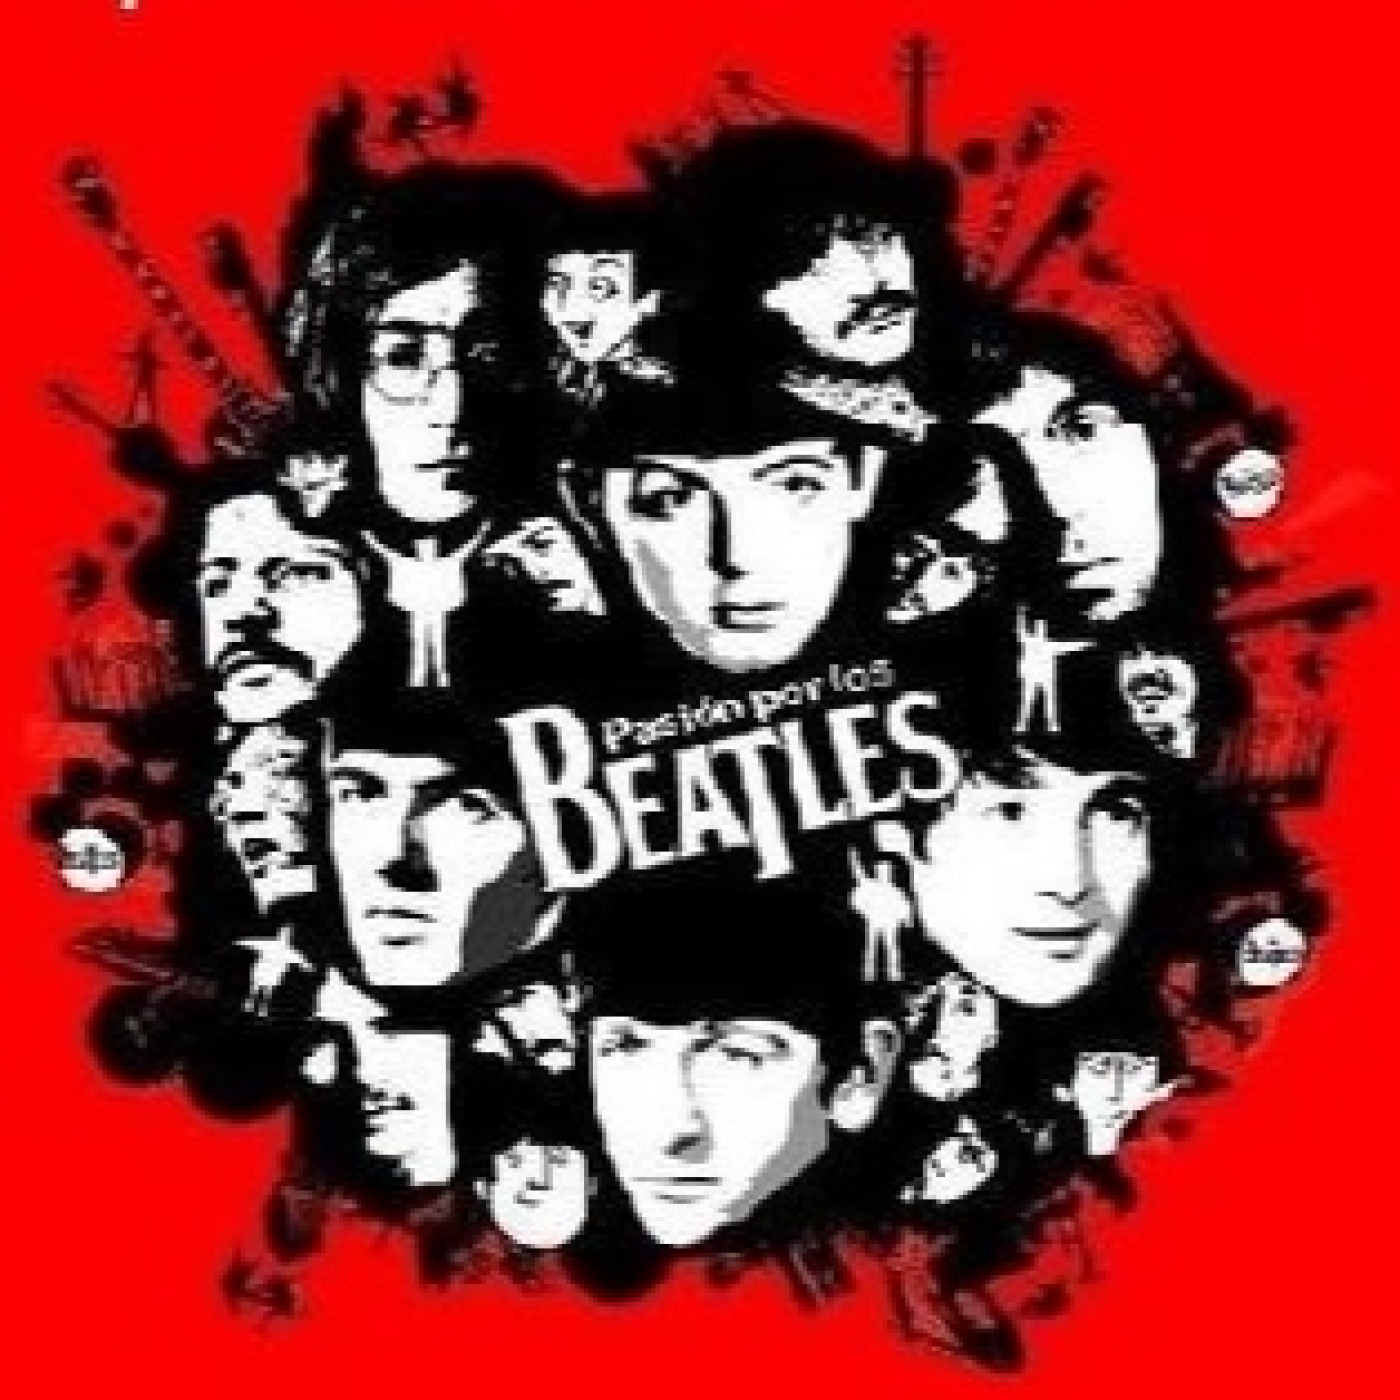 Pasión por los Beatles 123 - Beatles Anthology 2 - Disco 2